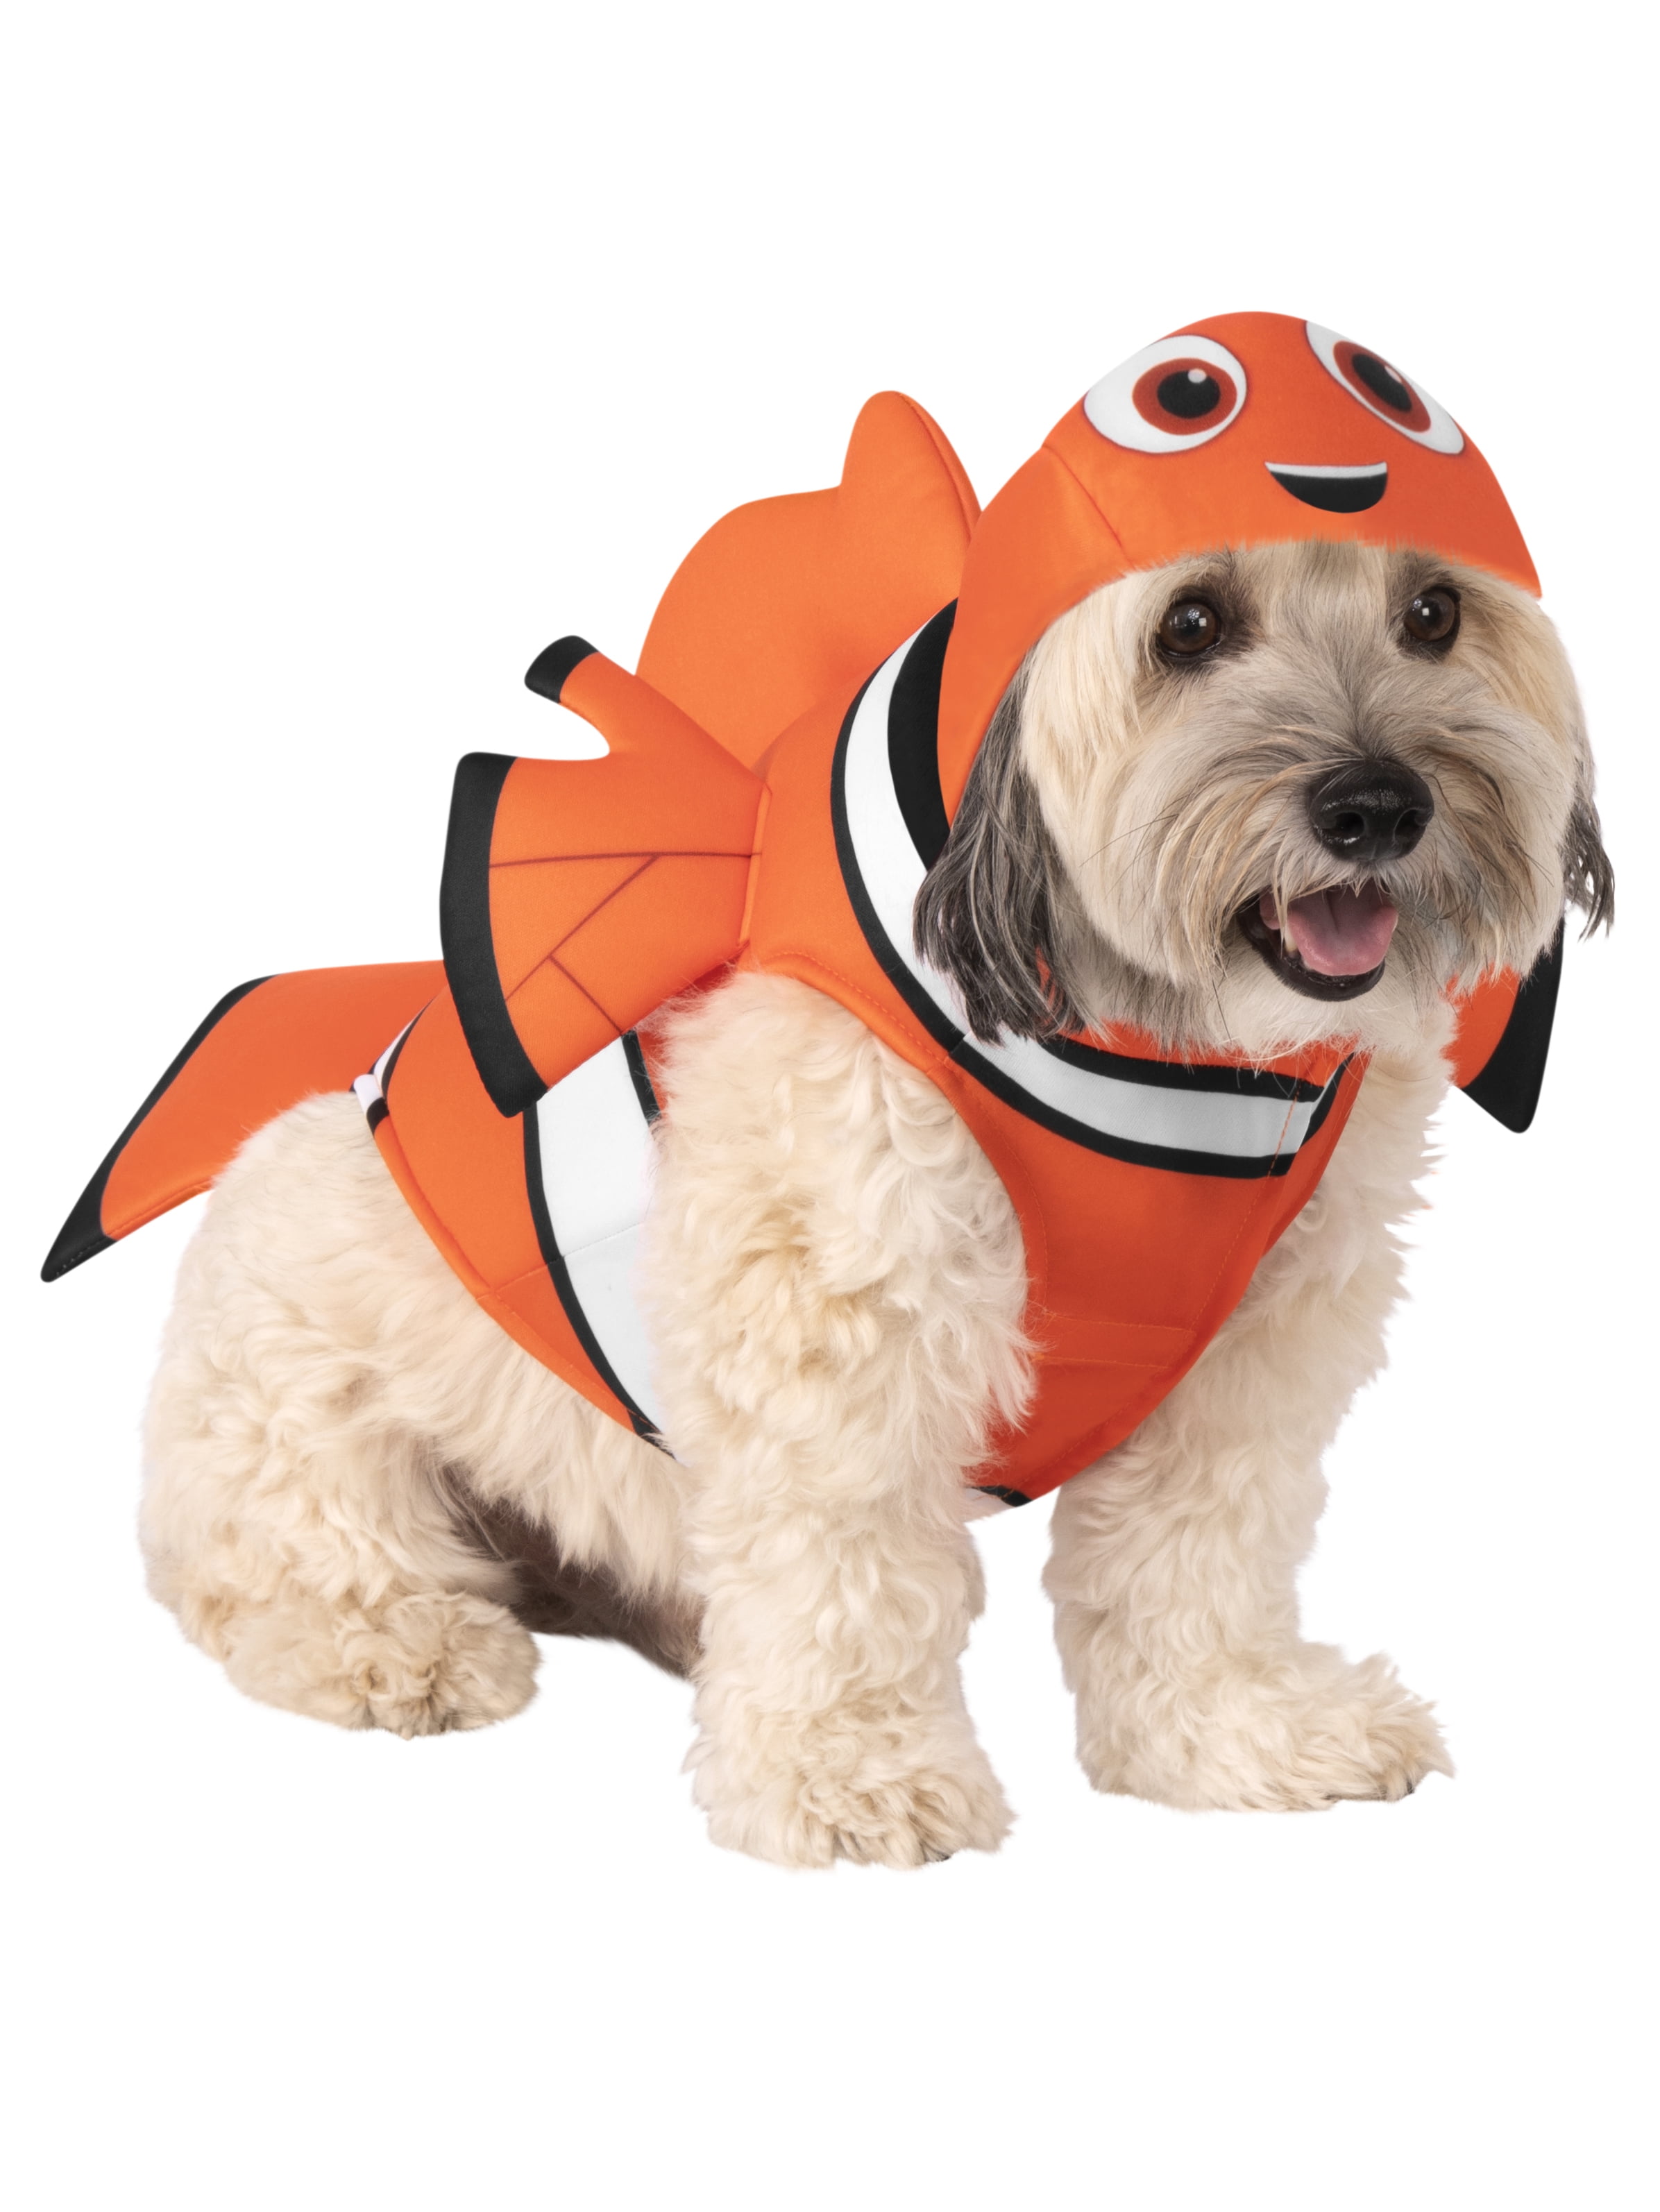 Finding Nemo: Nemo Pet Costume, S